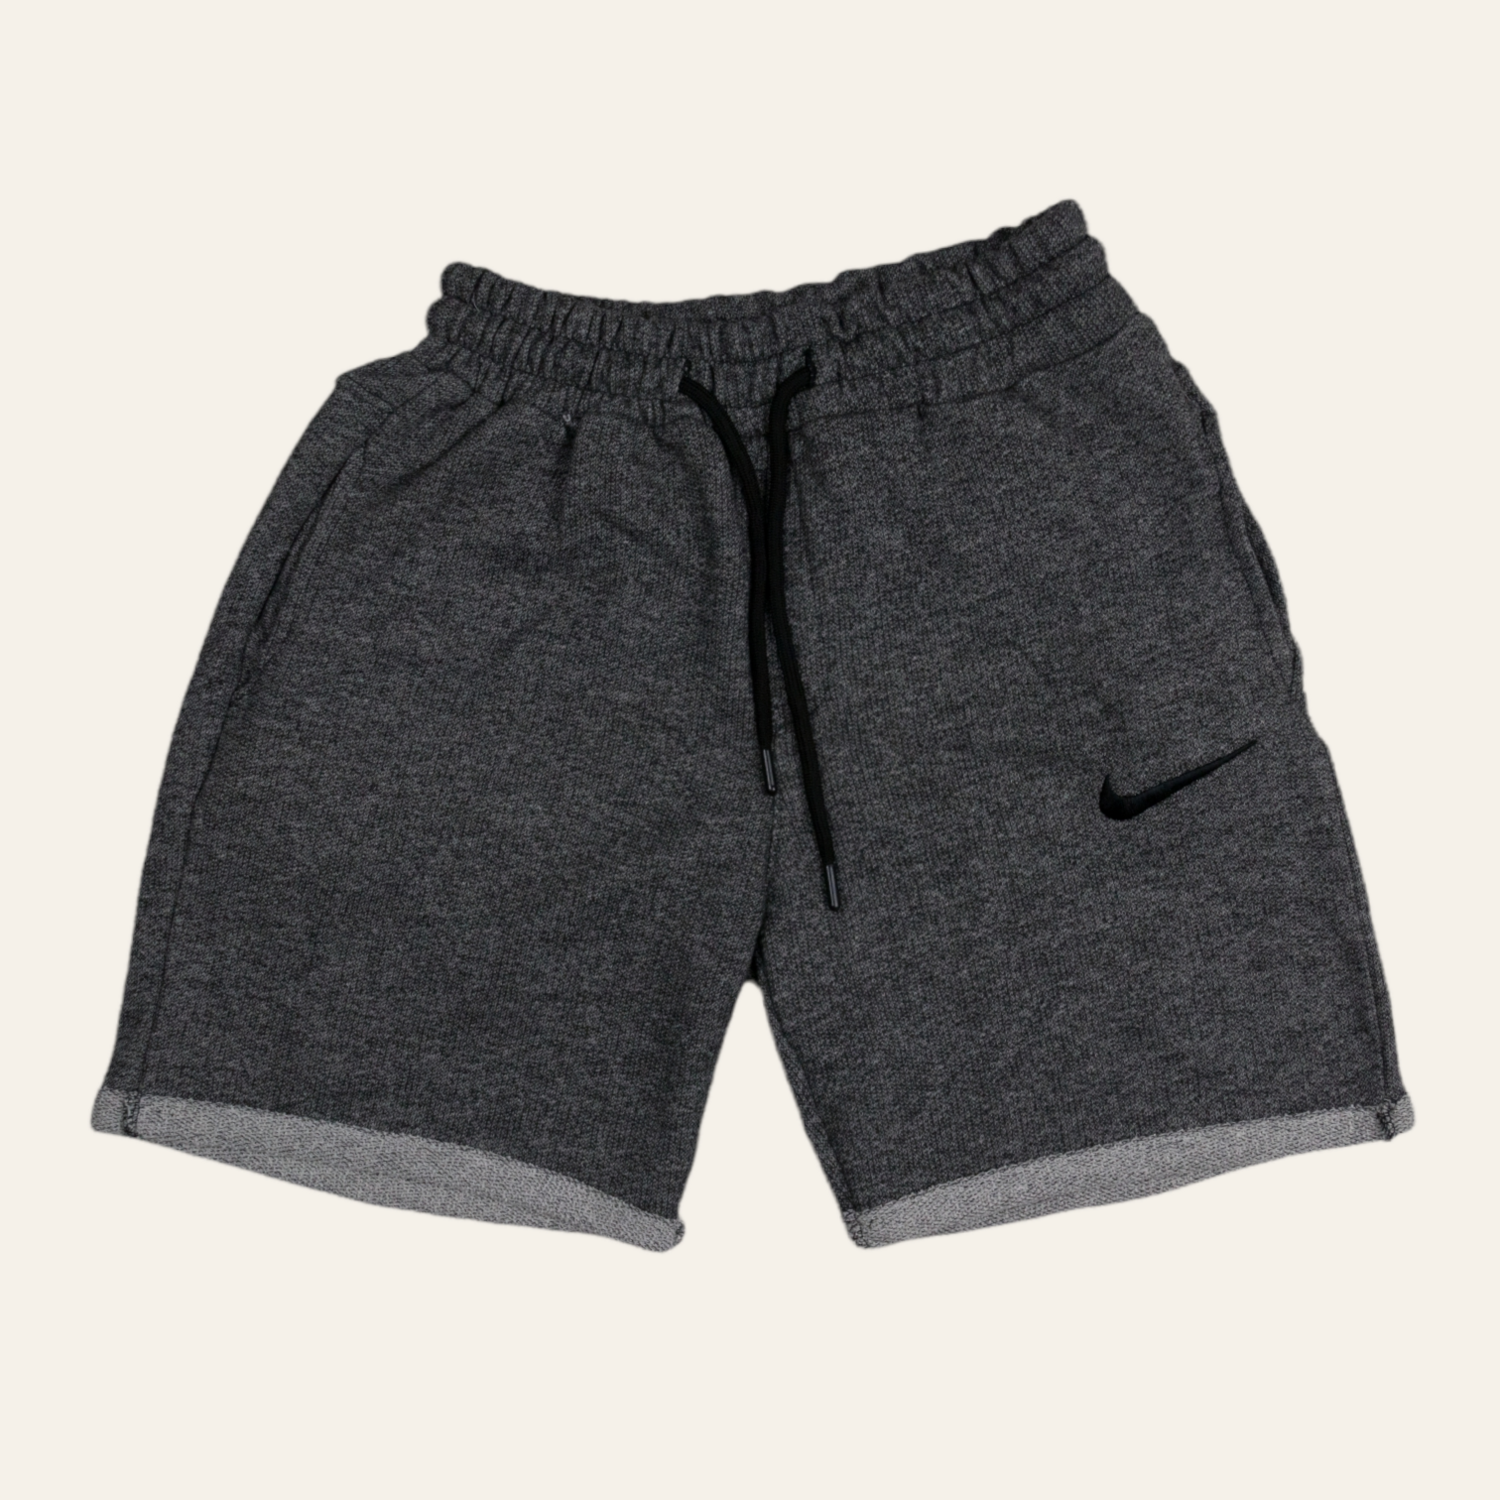 Nike short (GREY)